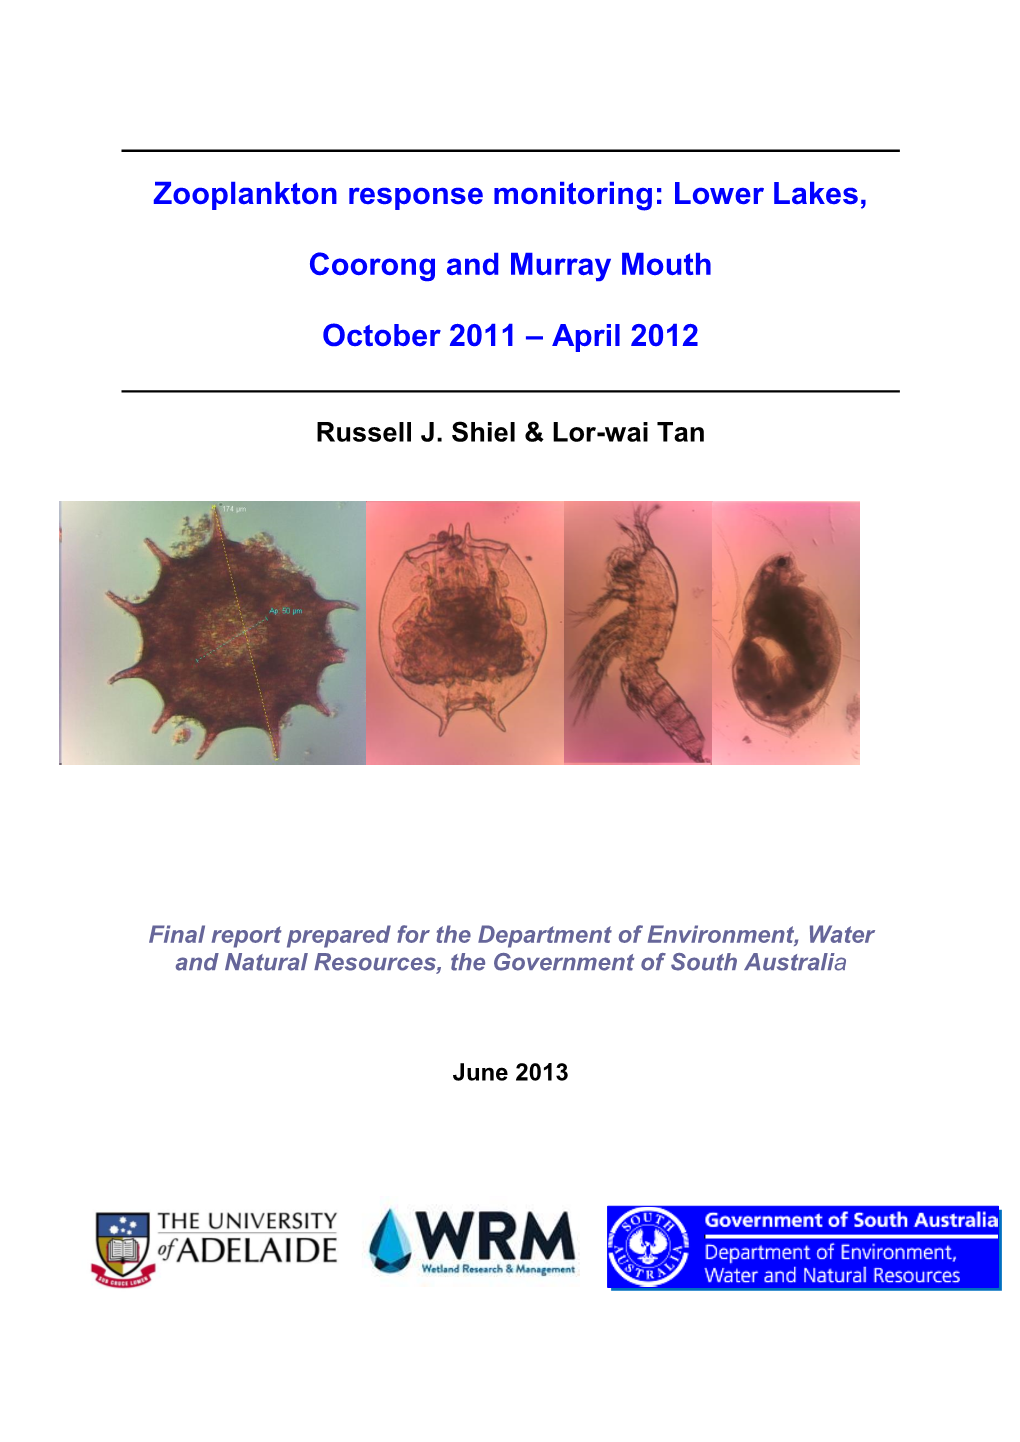 Zooplankton Response Monitoring: Lower Lakes, Coorong and Murray